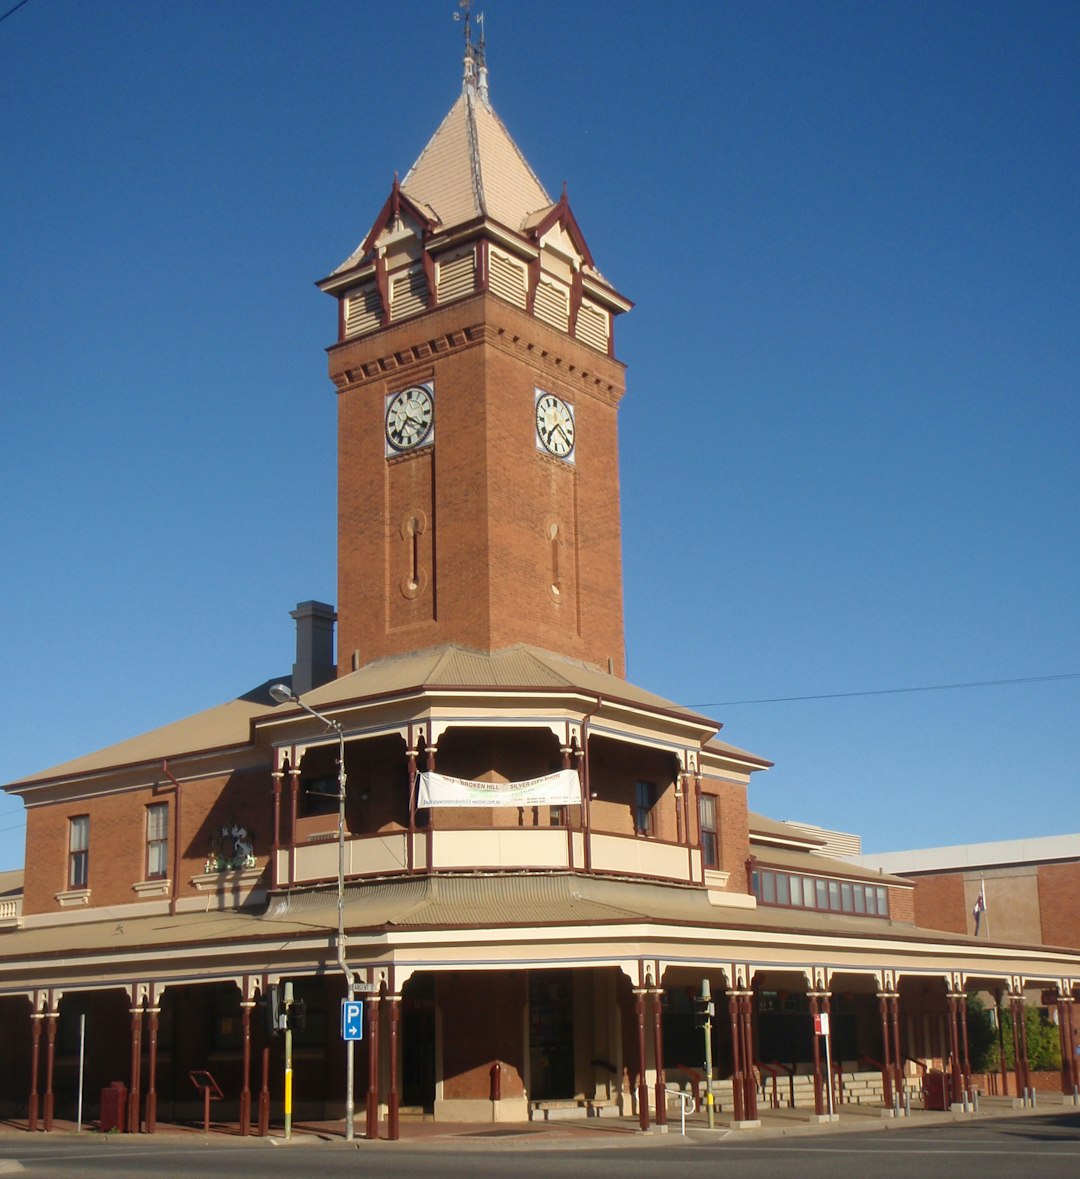 travelers stories about Landmark in Broken Hill NSW, Australia